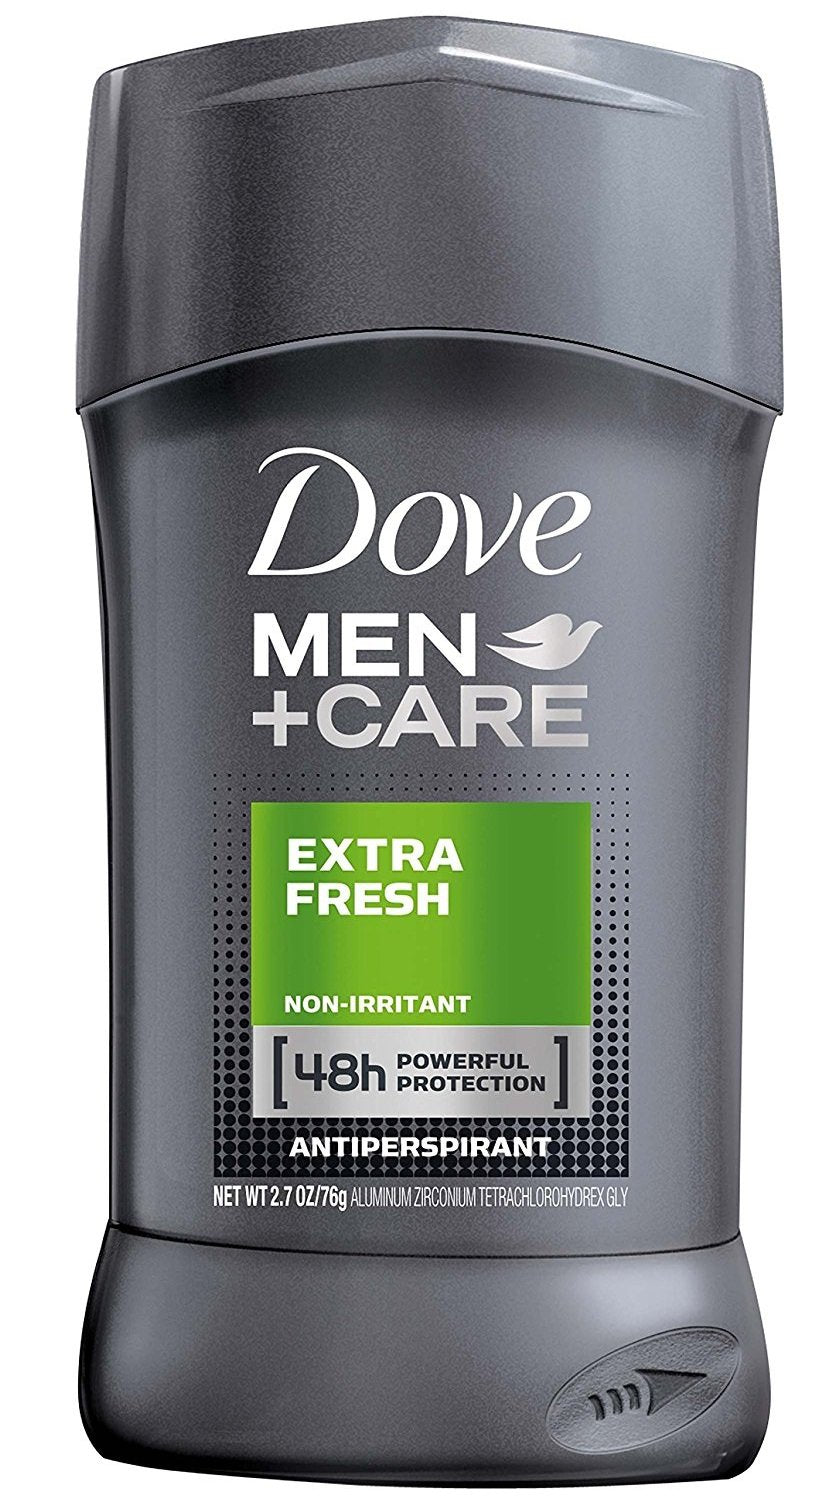 Dove Men + Care 48 Hour Antiperspirant Stick, Non-Irritant, Extra Fresh, 2.7 Ounces, Pack of 4